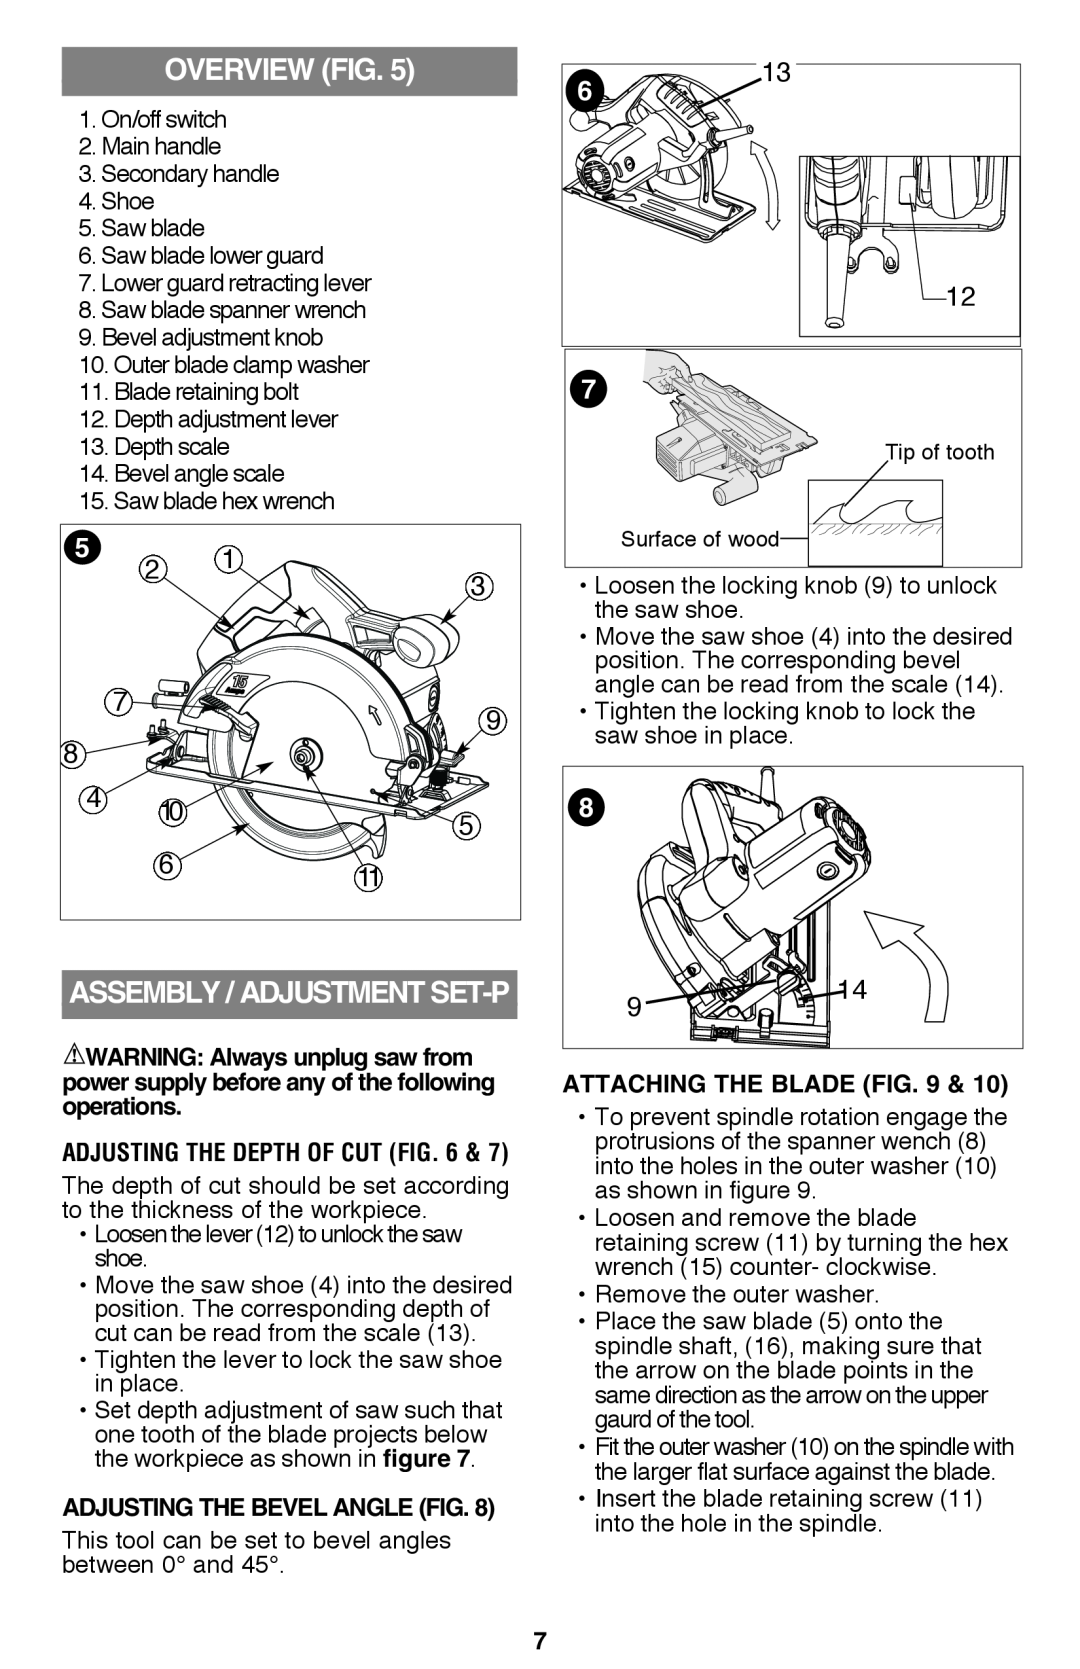 Black & Decker CS1015 Overview fig, Assembly / adjustment set-p, Adjusting the depth of cut fig, attaching the blade Fig 